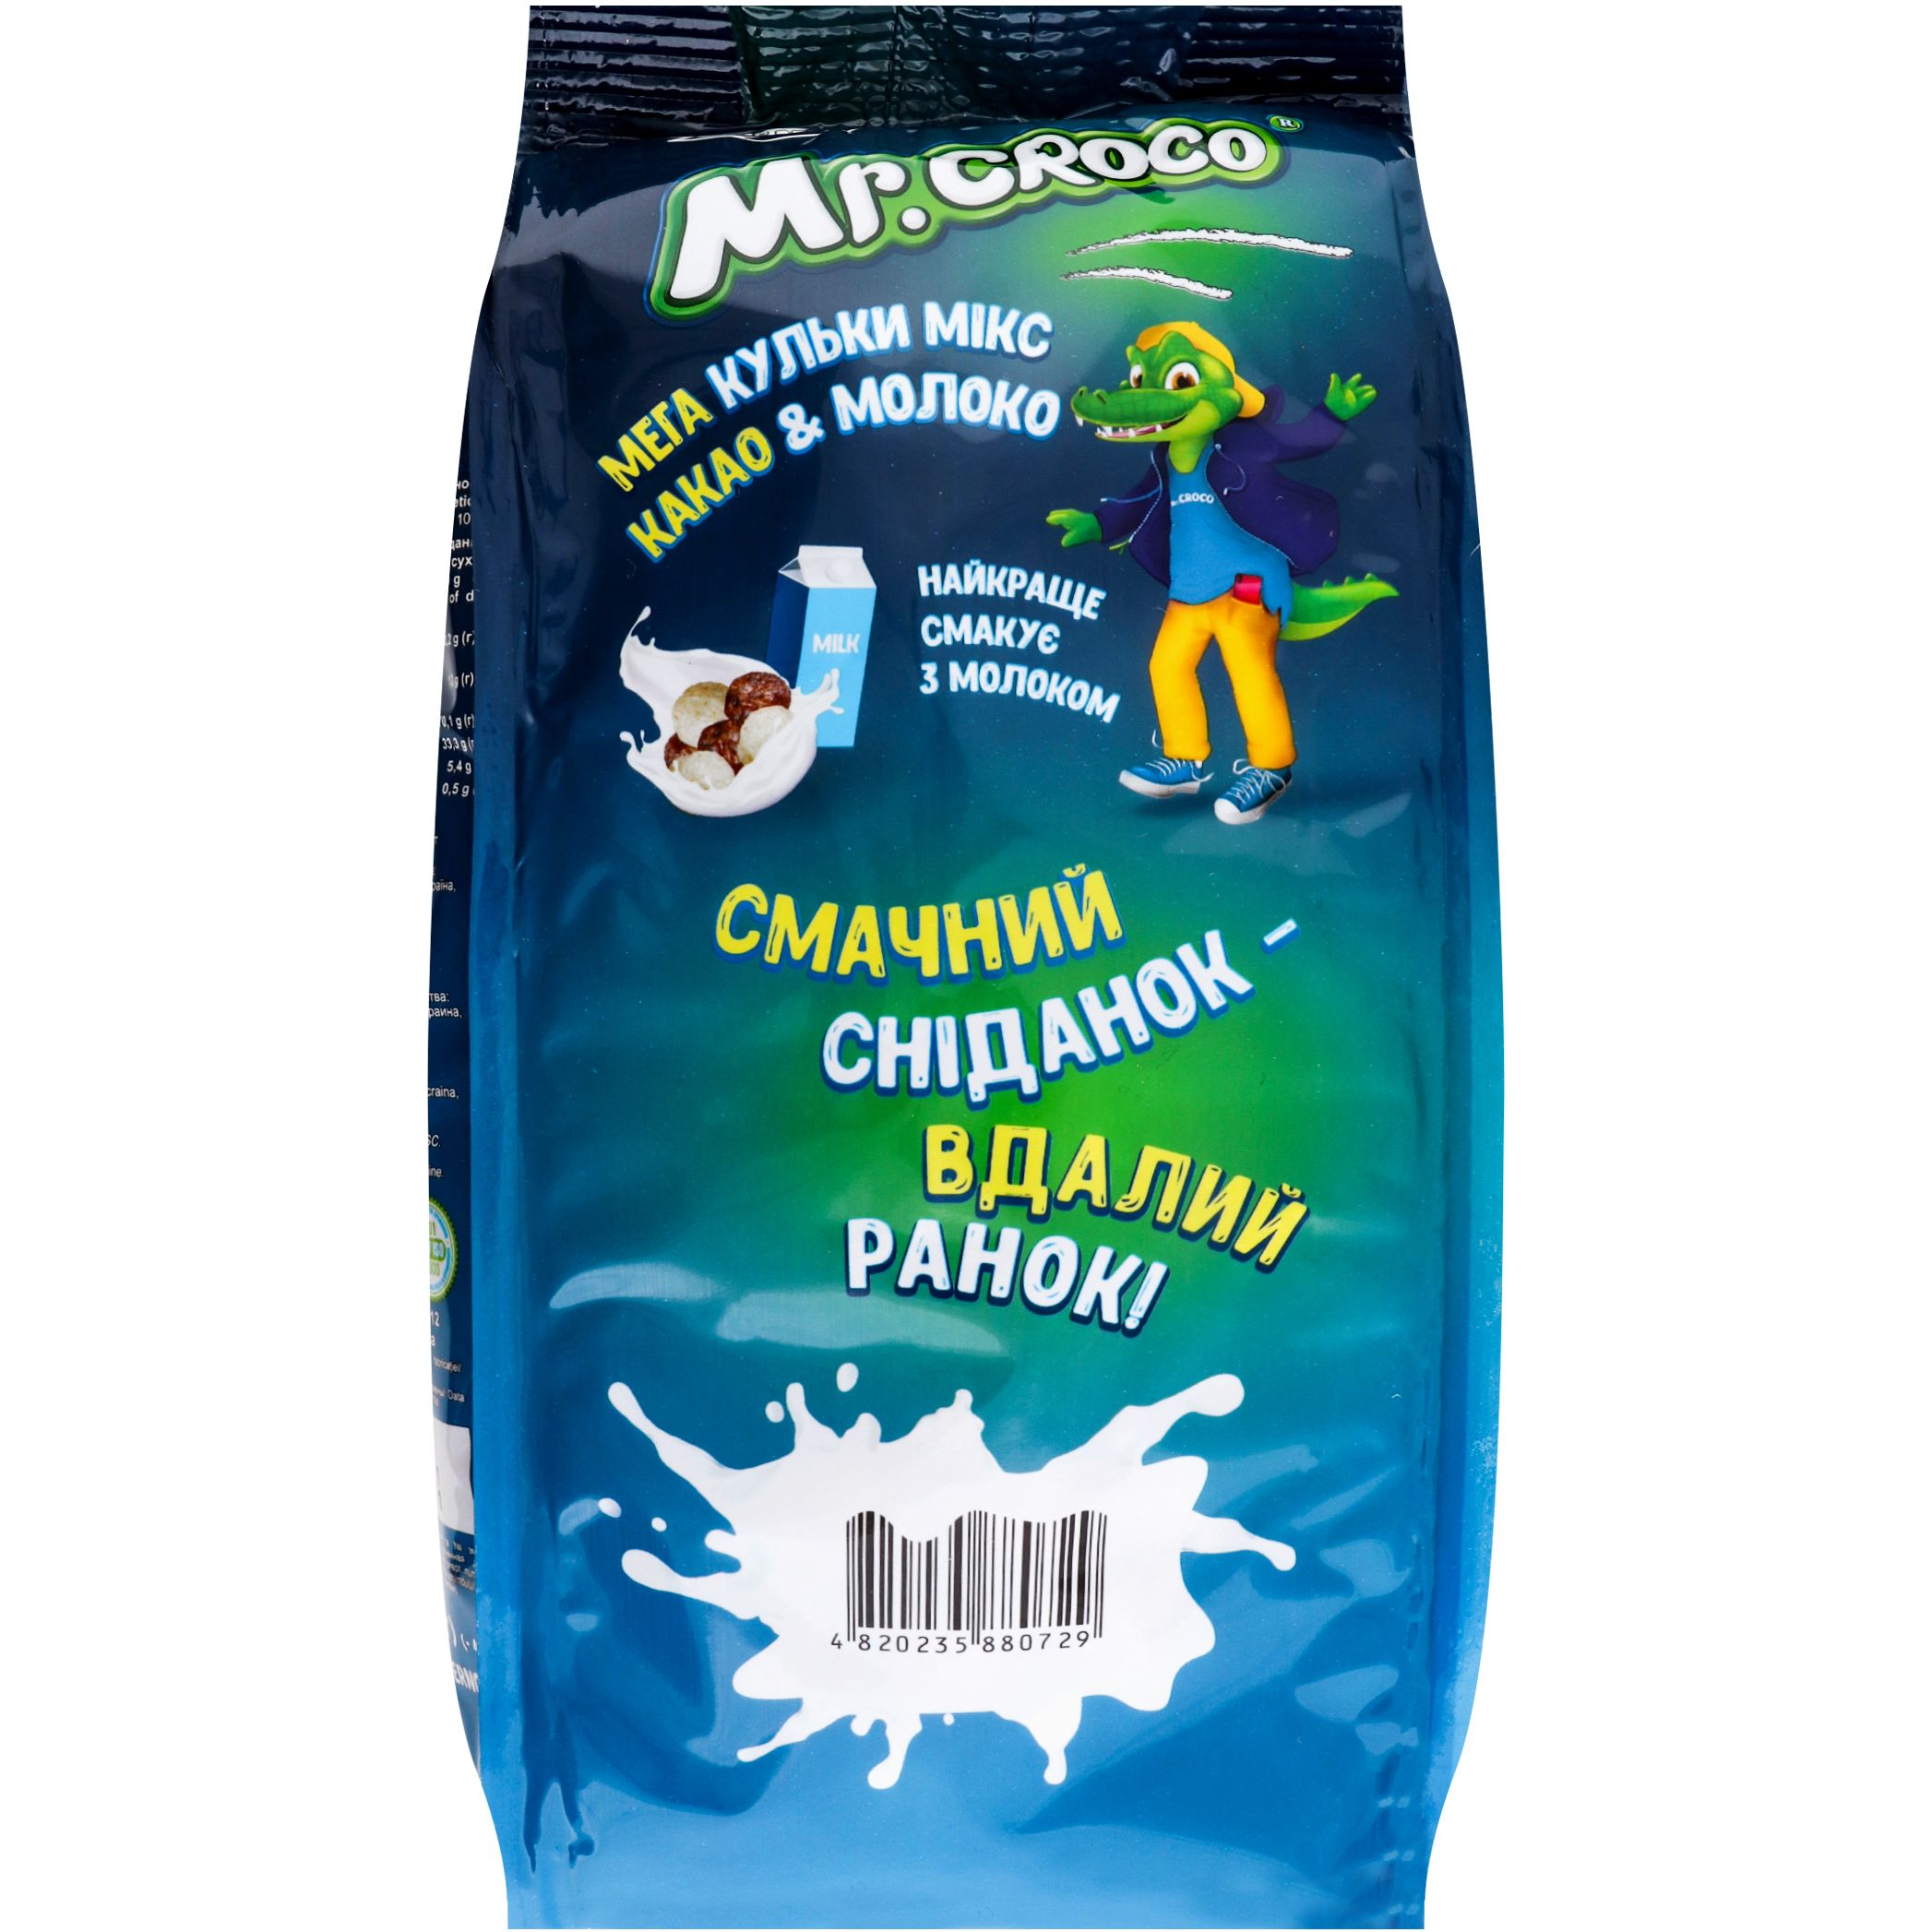 Шарики Mr. Croco Mega микс с какао и молоком 180 г (922184) - фото 2